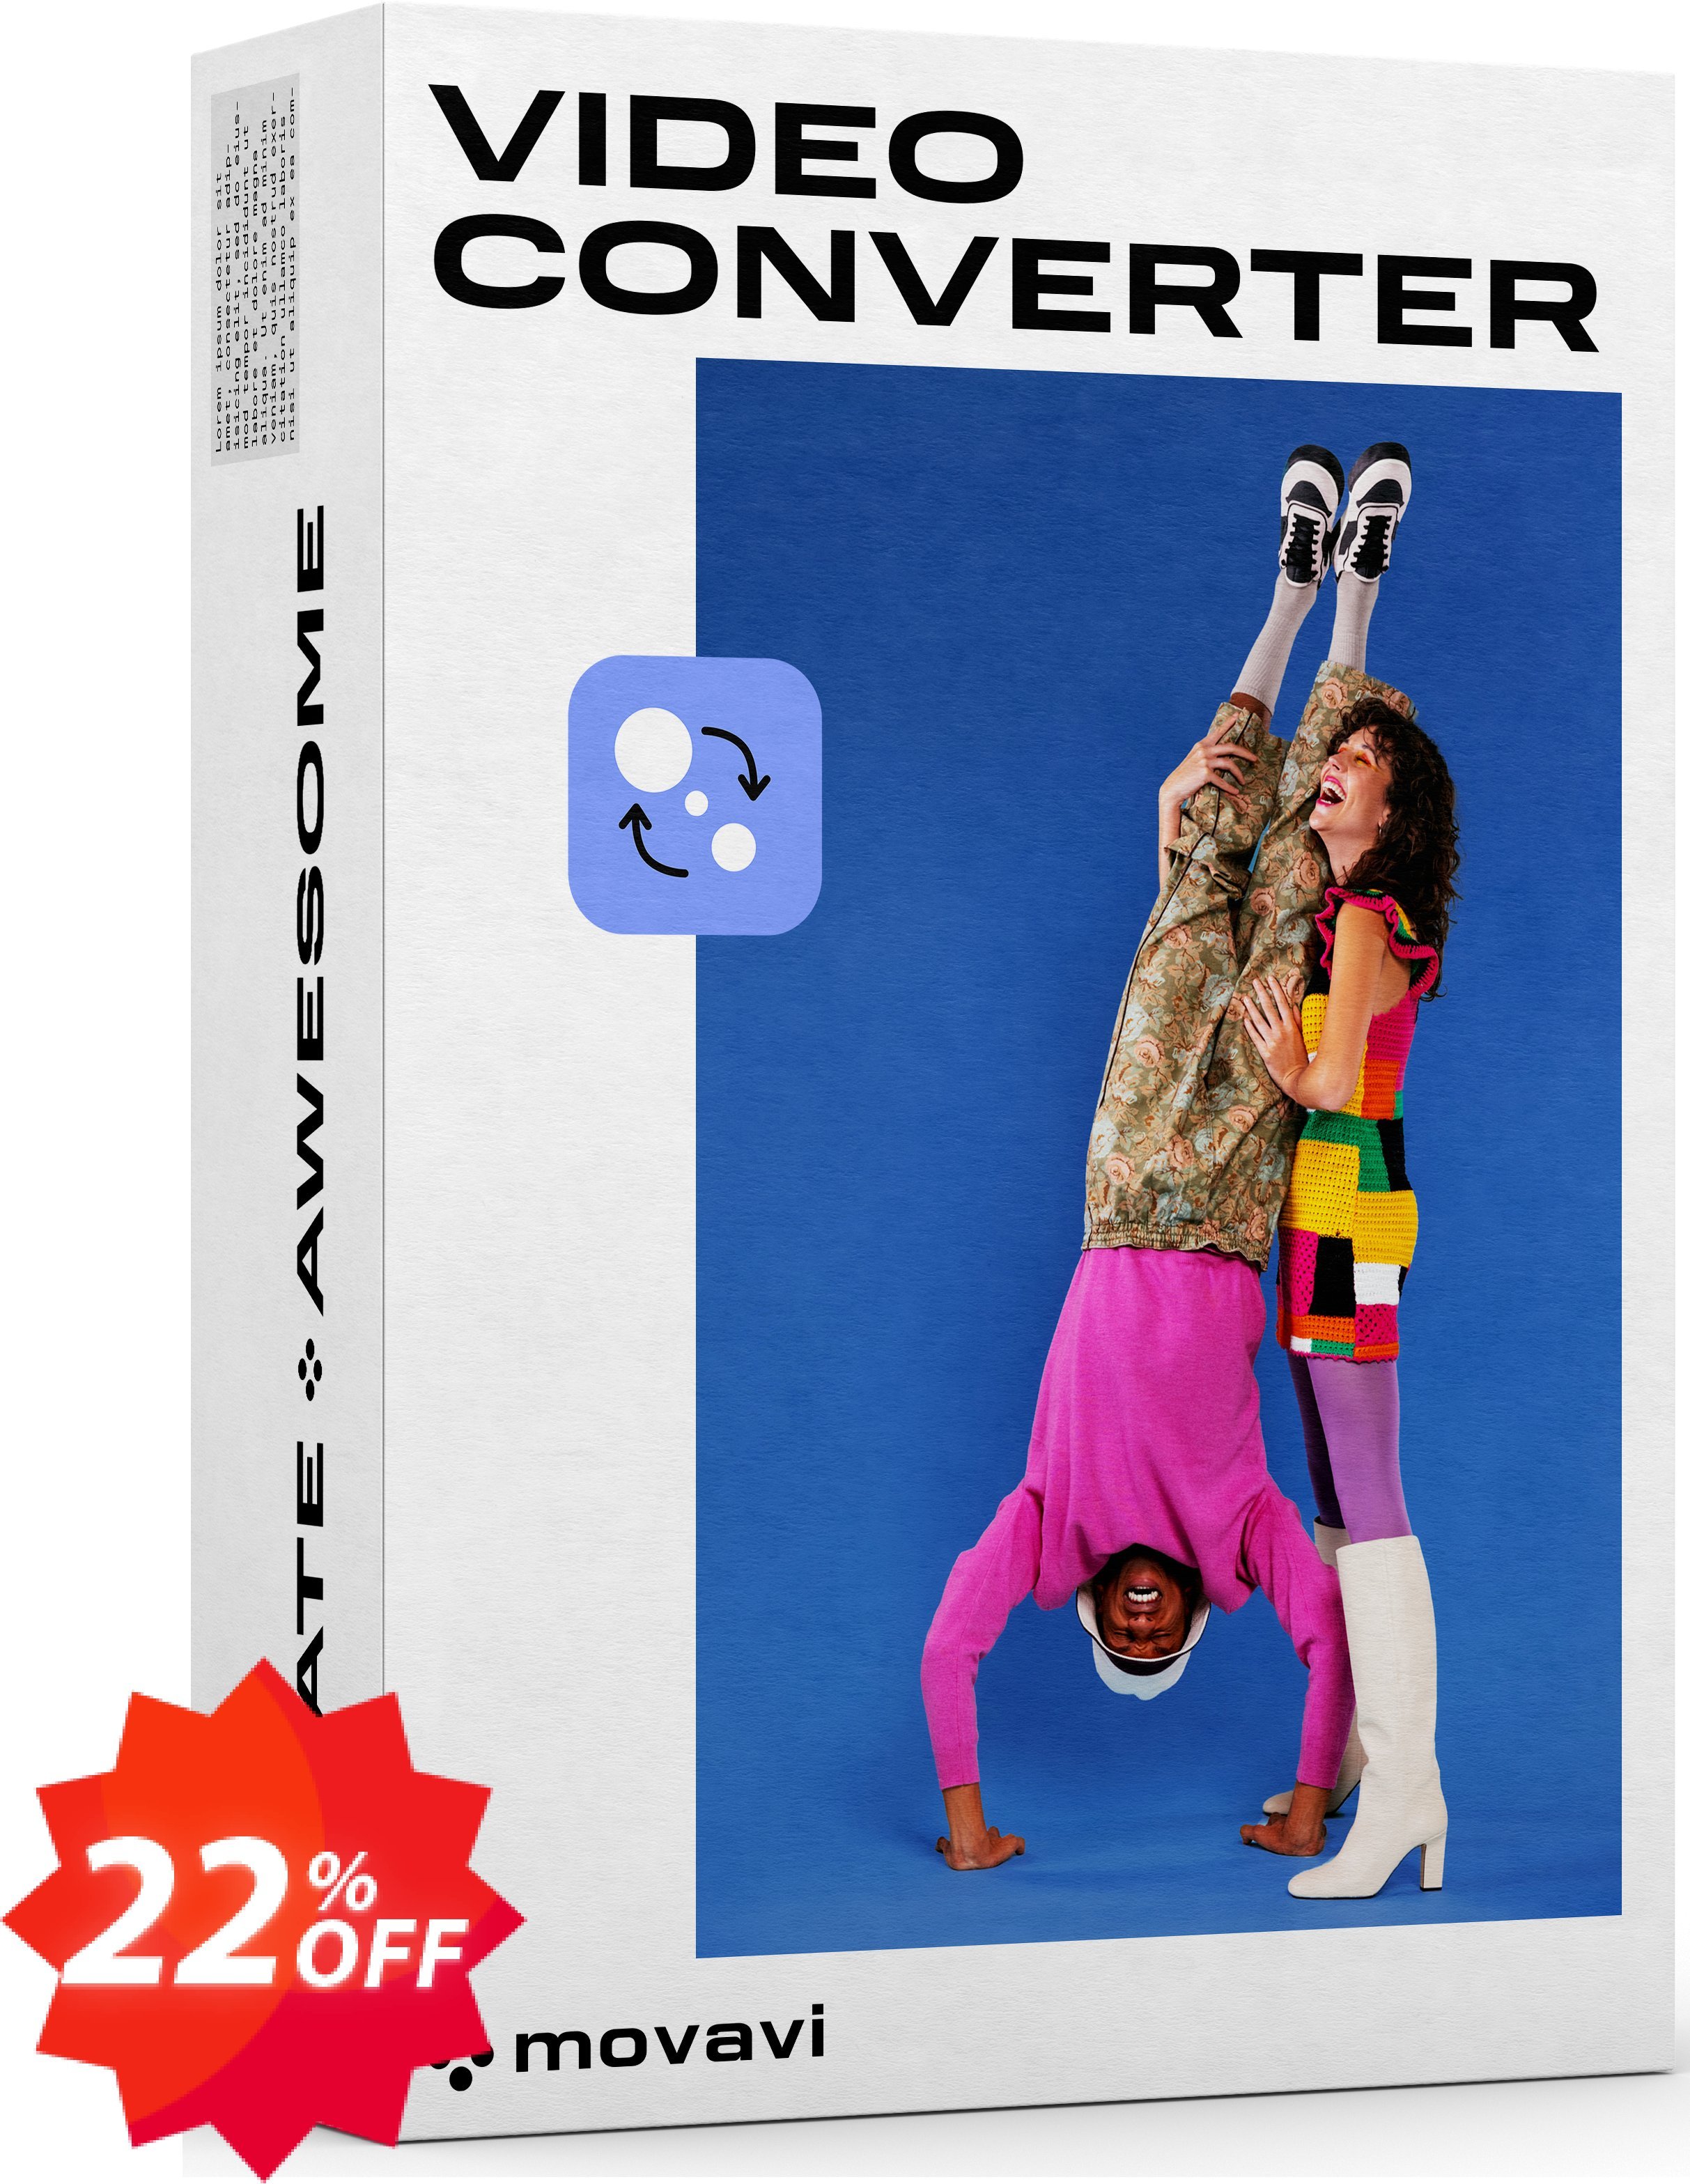 Movavi Video Converter Premium Coupon code 22% discount 